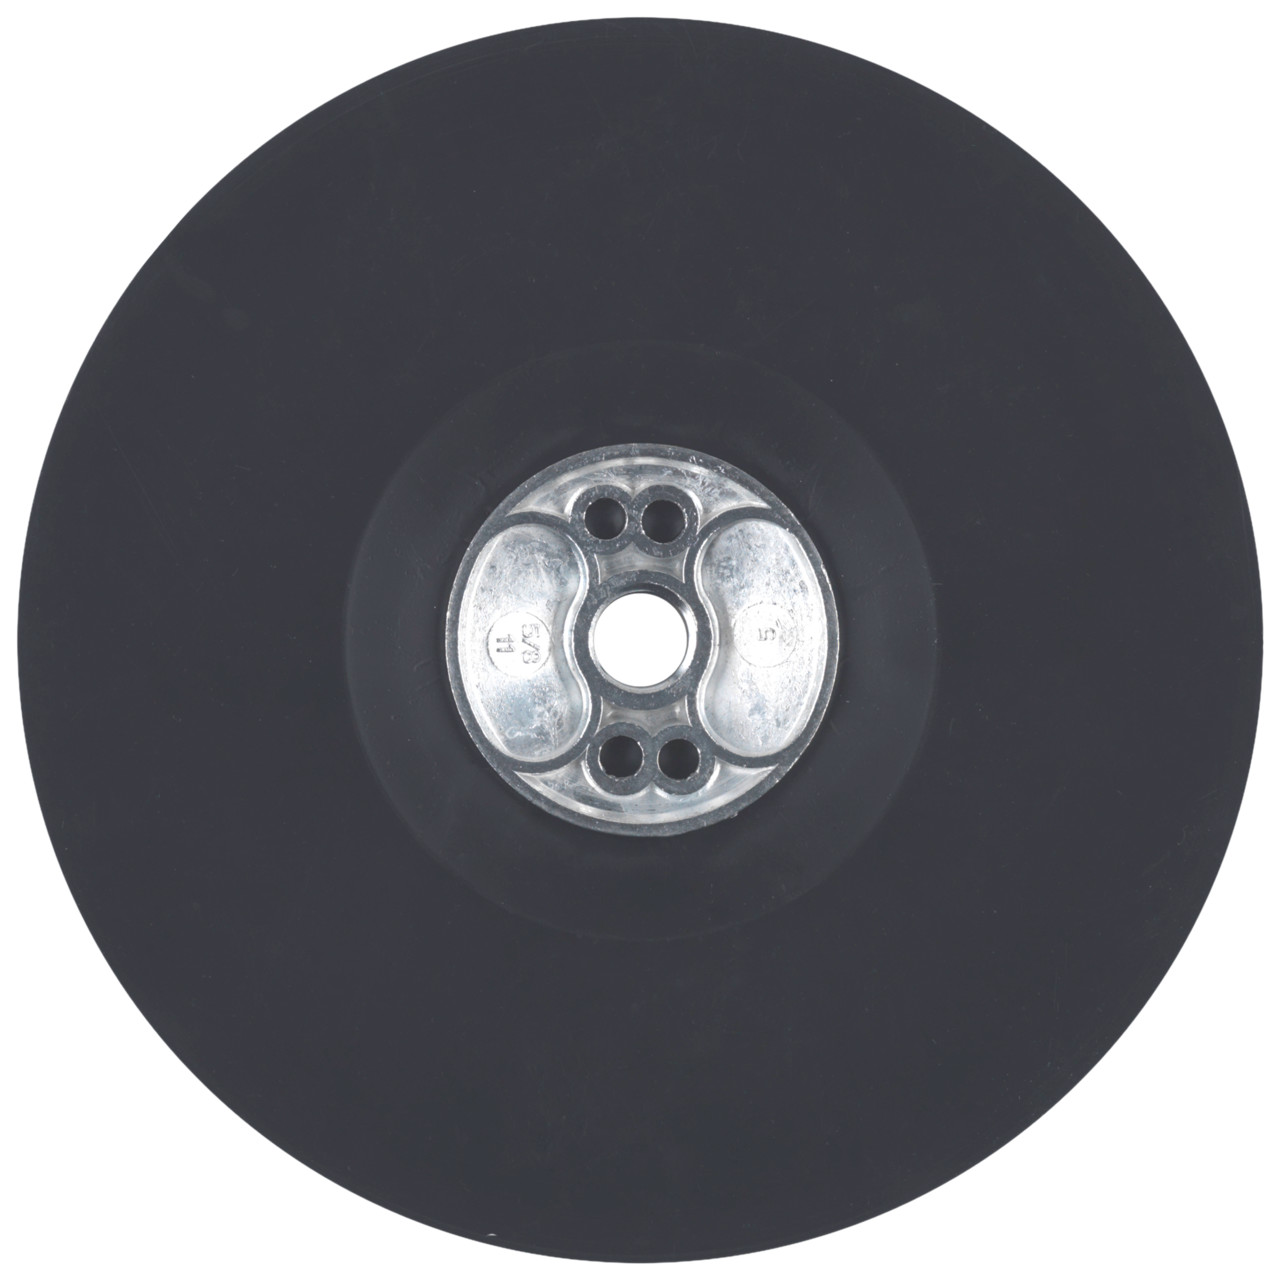 Accessori Tyrolit DxH 115x22 Per disco in fibra, durezza: HARD, forma: PAD, Art. 709995